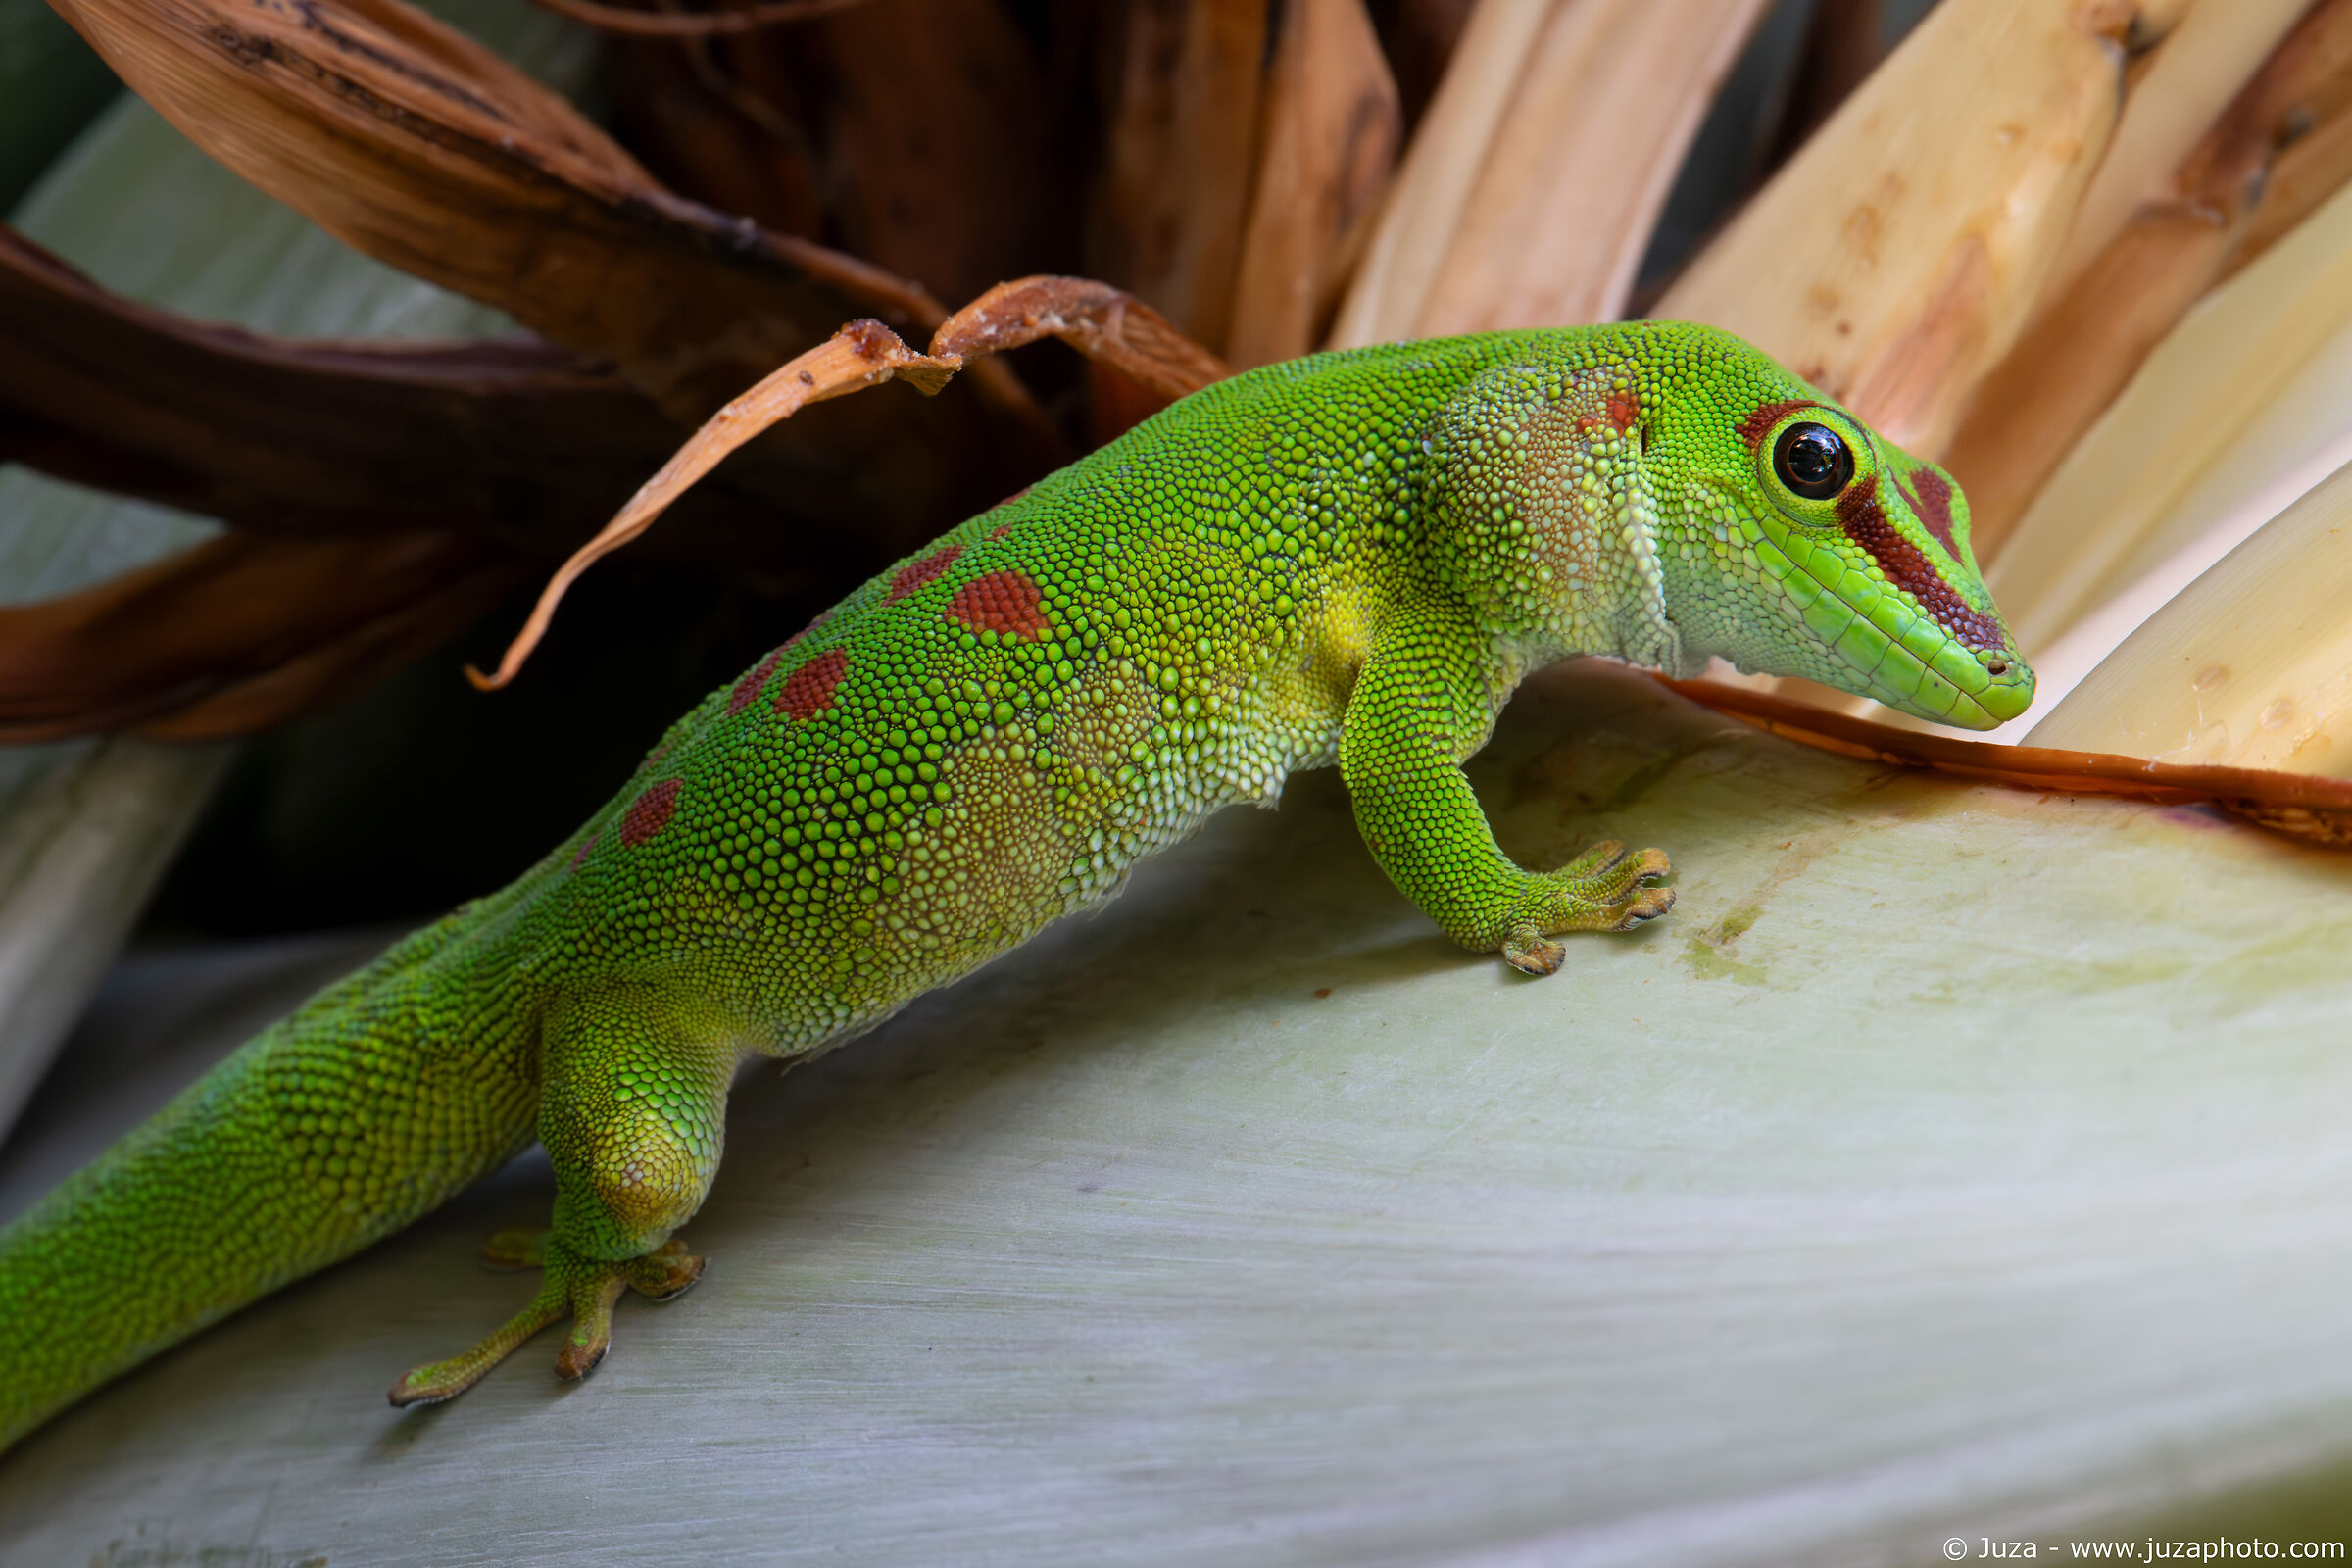 Madagascar giant day gecko (Phelsuma grandis)...